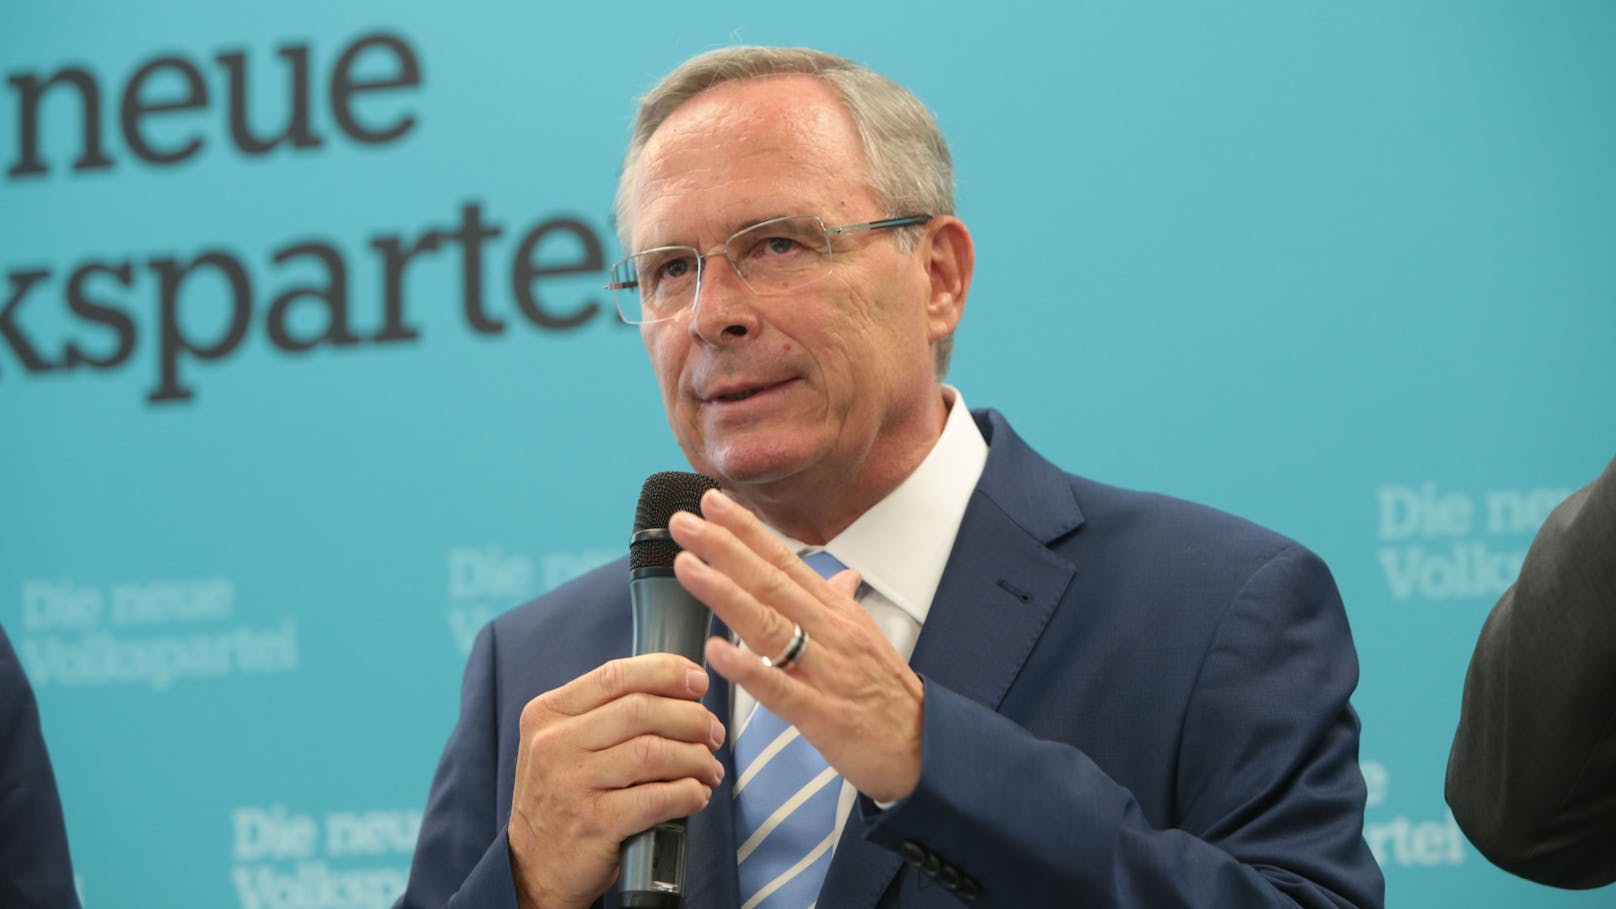 "Wien ist Sozialmagnet" – ÖVP will Migration stoppen